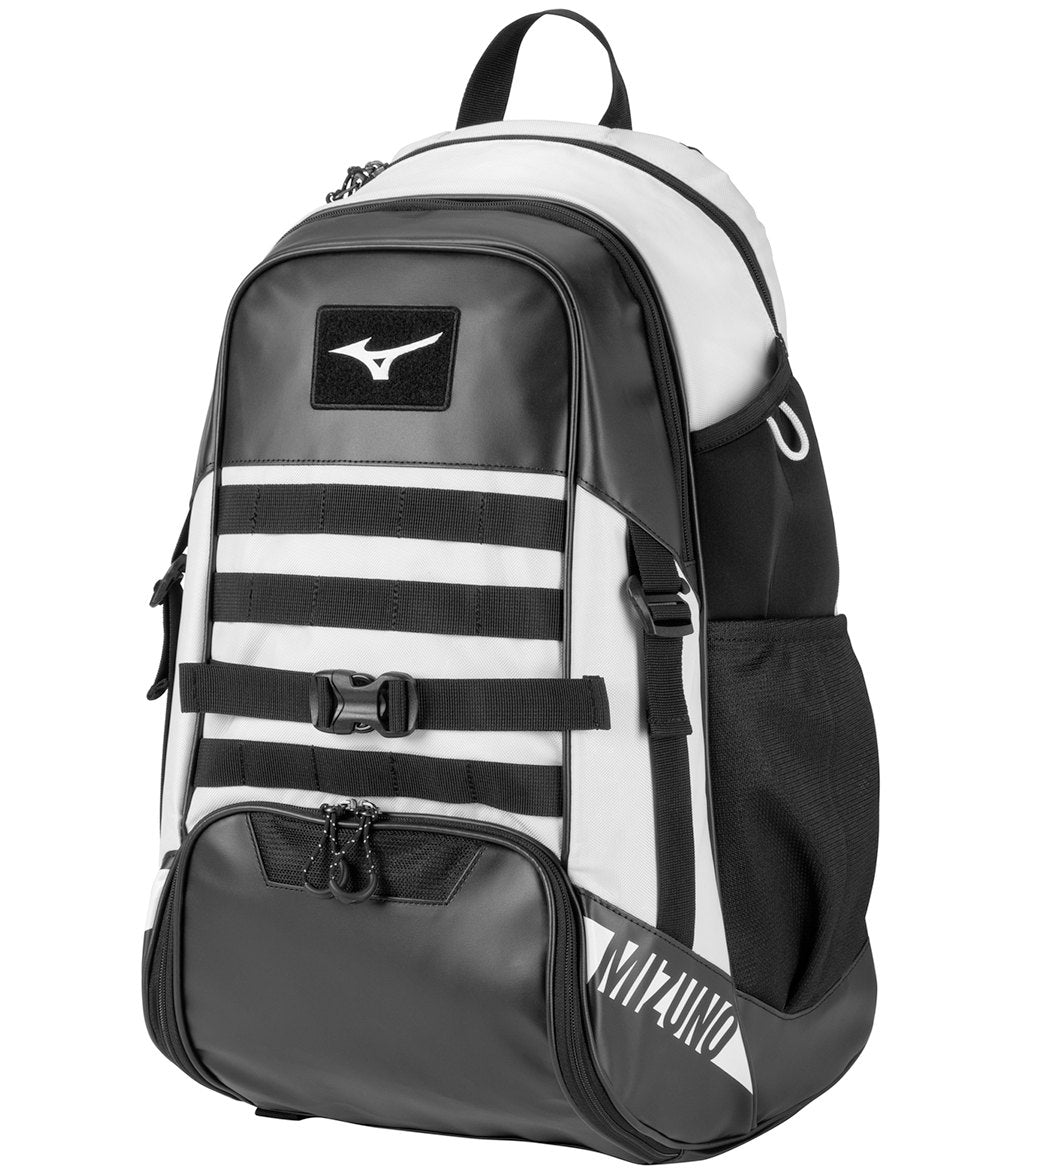 Mizuno Mvp X Backpack - Black-White Black/White - Swimoutlet.com